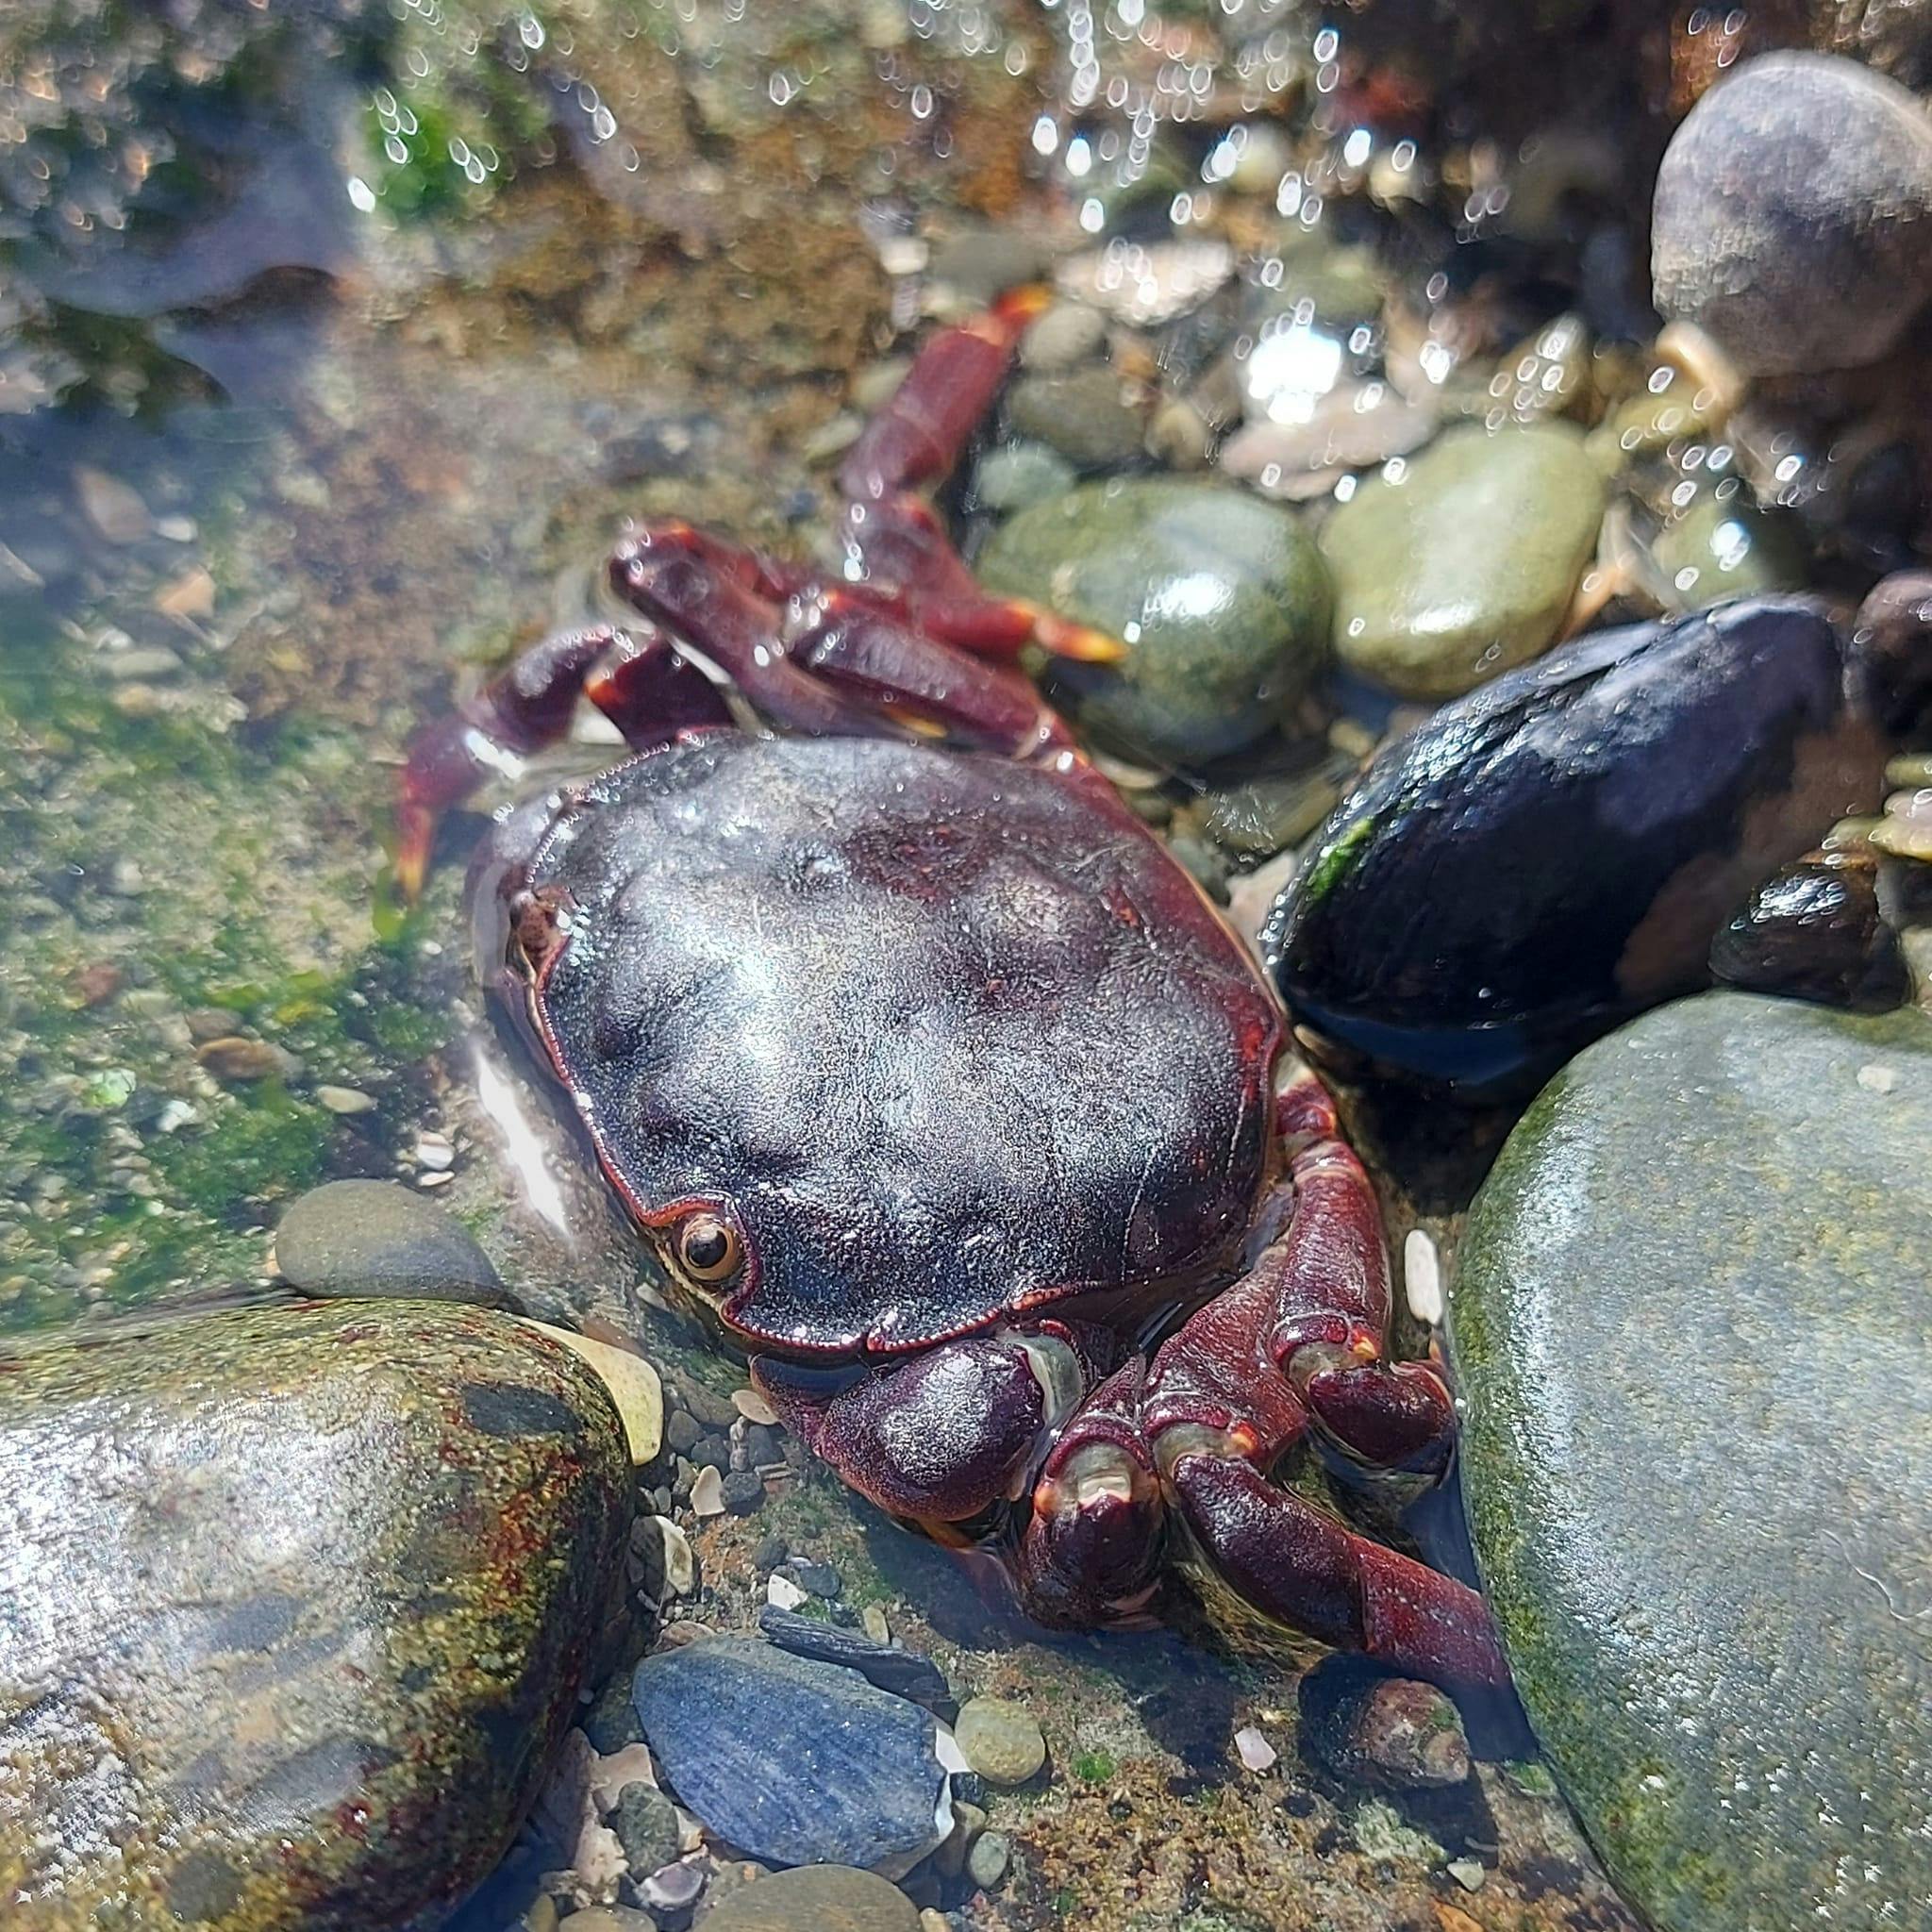 Another common rock crab resident of Waitarakao Washdyke Lagoon